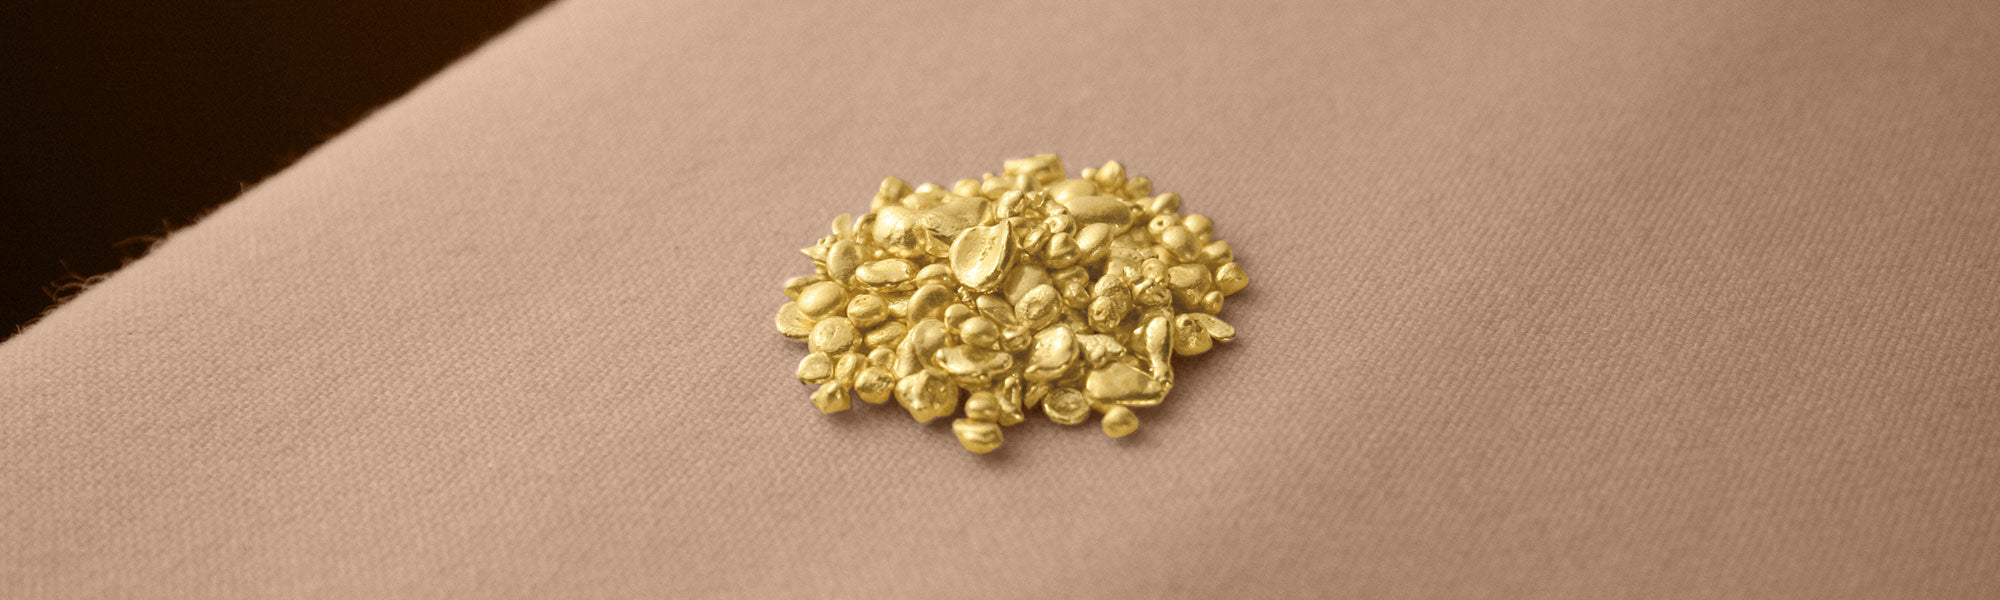 24ct-gold-casting-grain